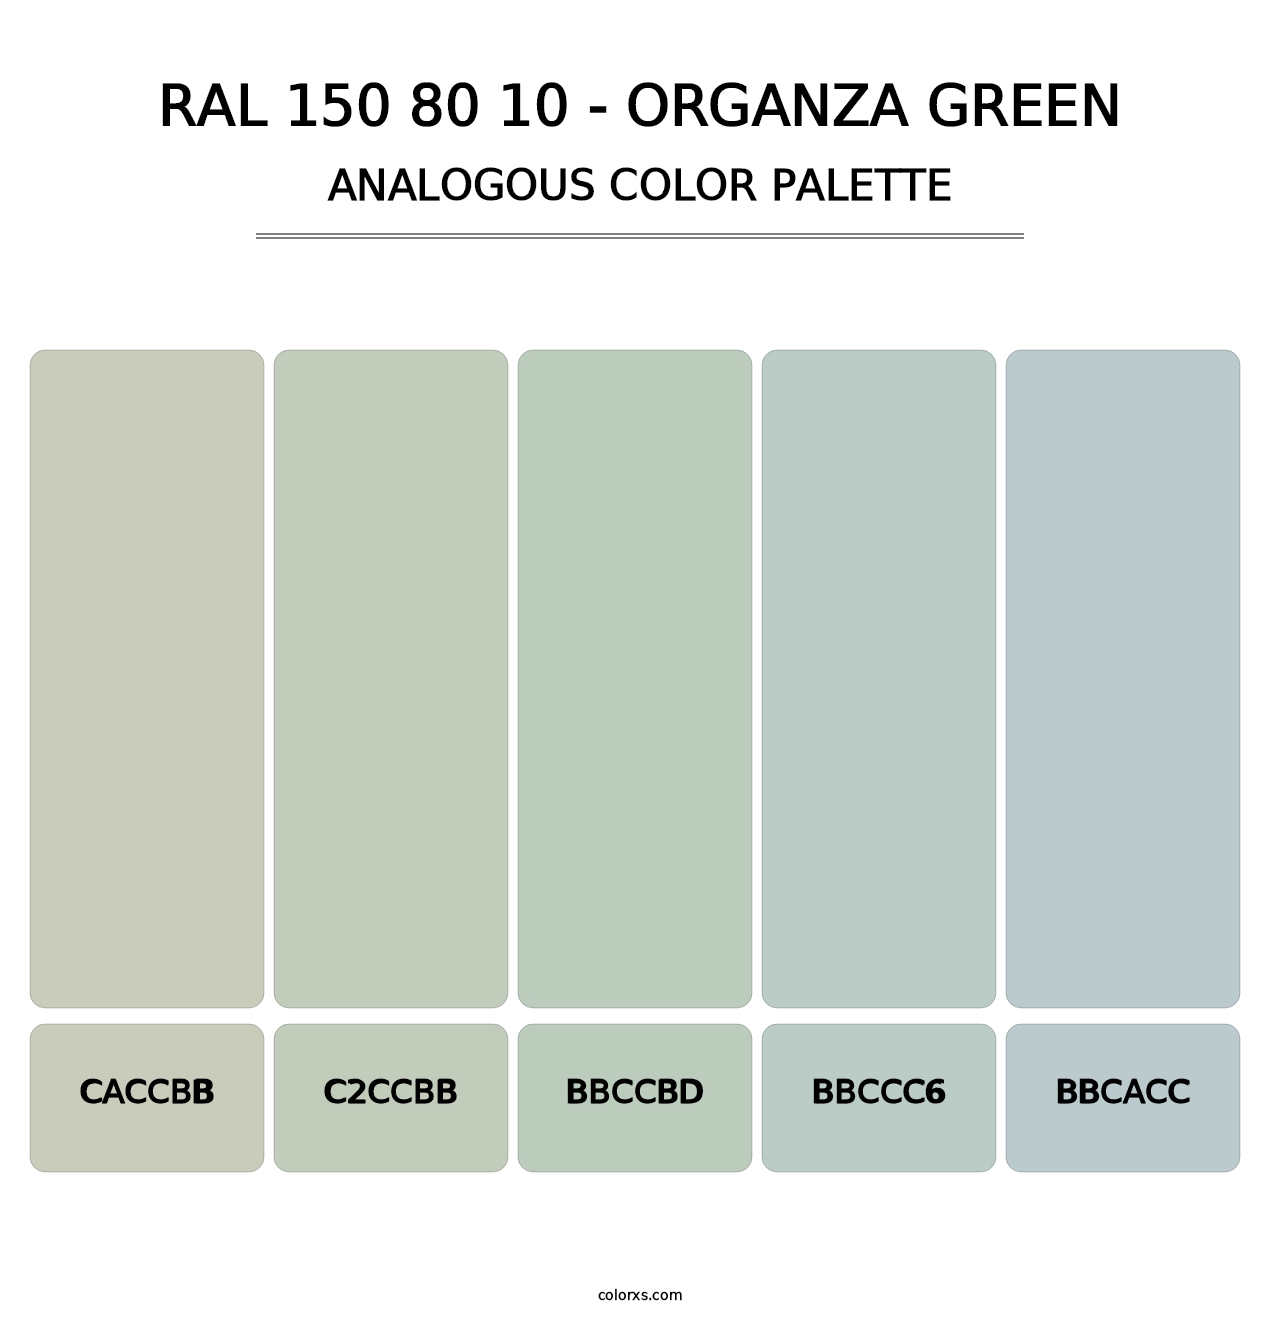 RAL 150 80 10 - Organza Green - Analogous Color Palette